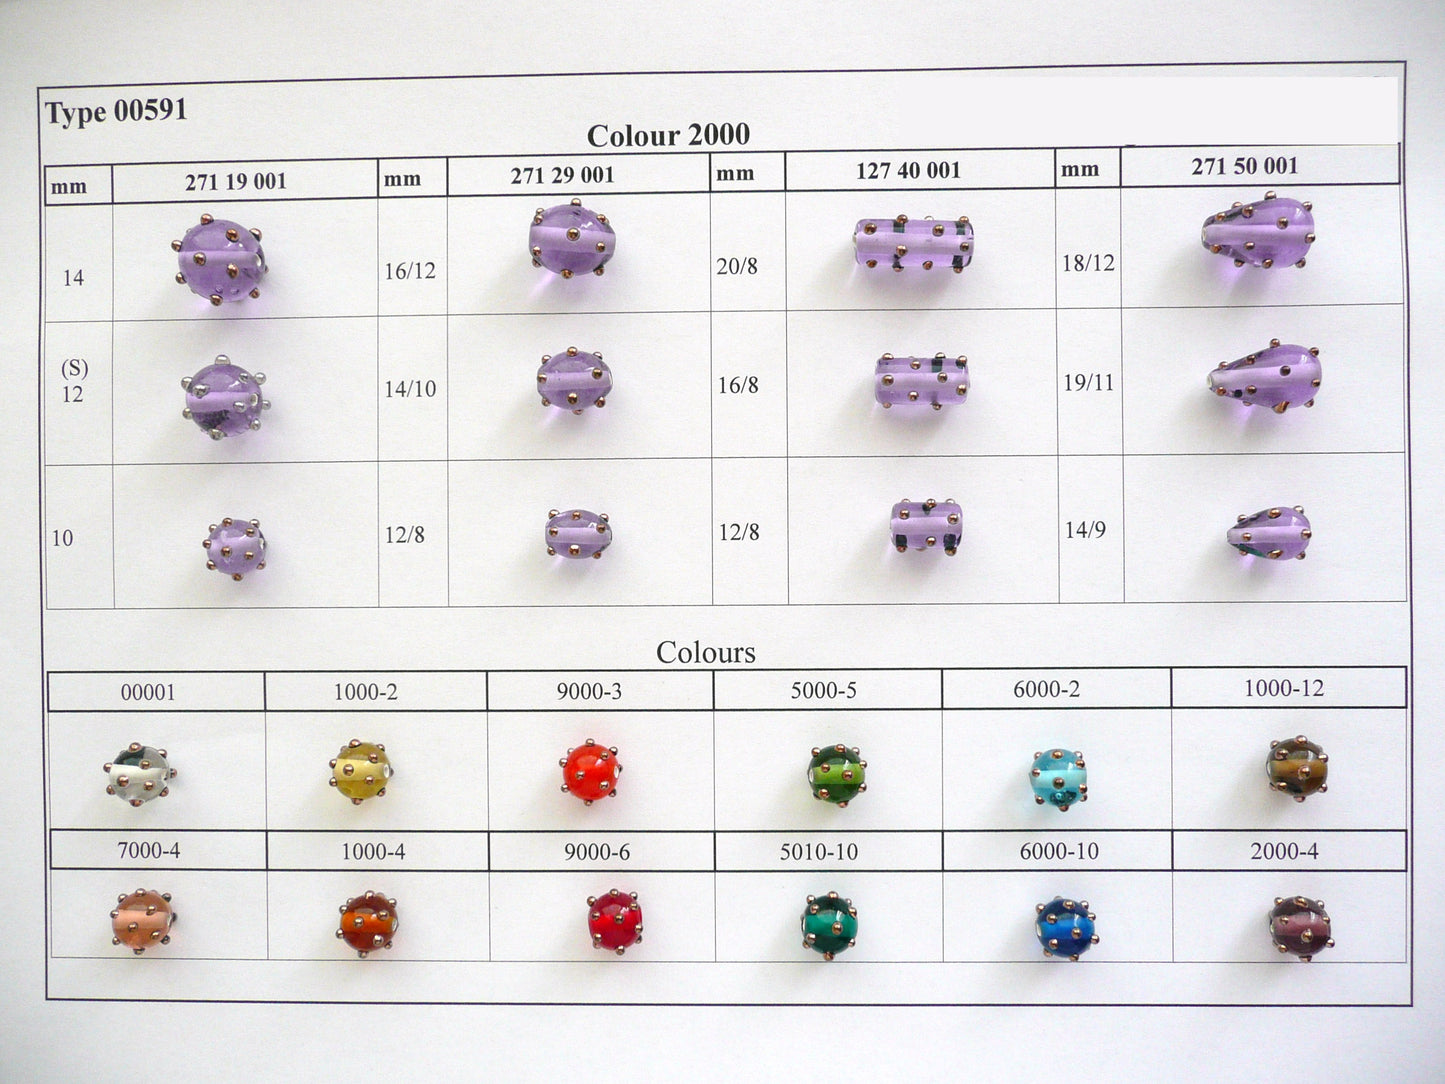 30 pcs Lampwork Beads 591 / Teardrop/Pear (271-50-001), Handmade, Preciosa Glass, Czech Republic